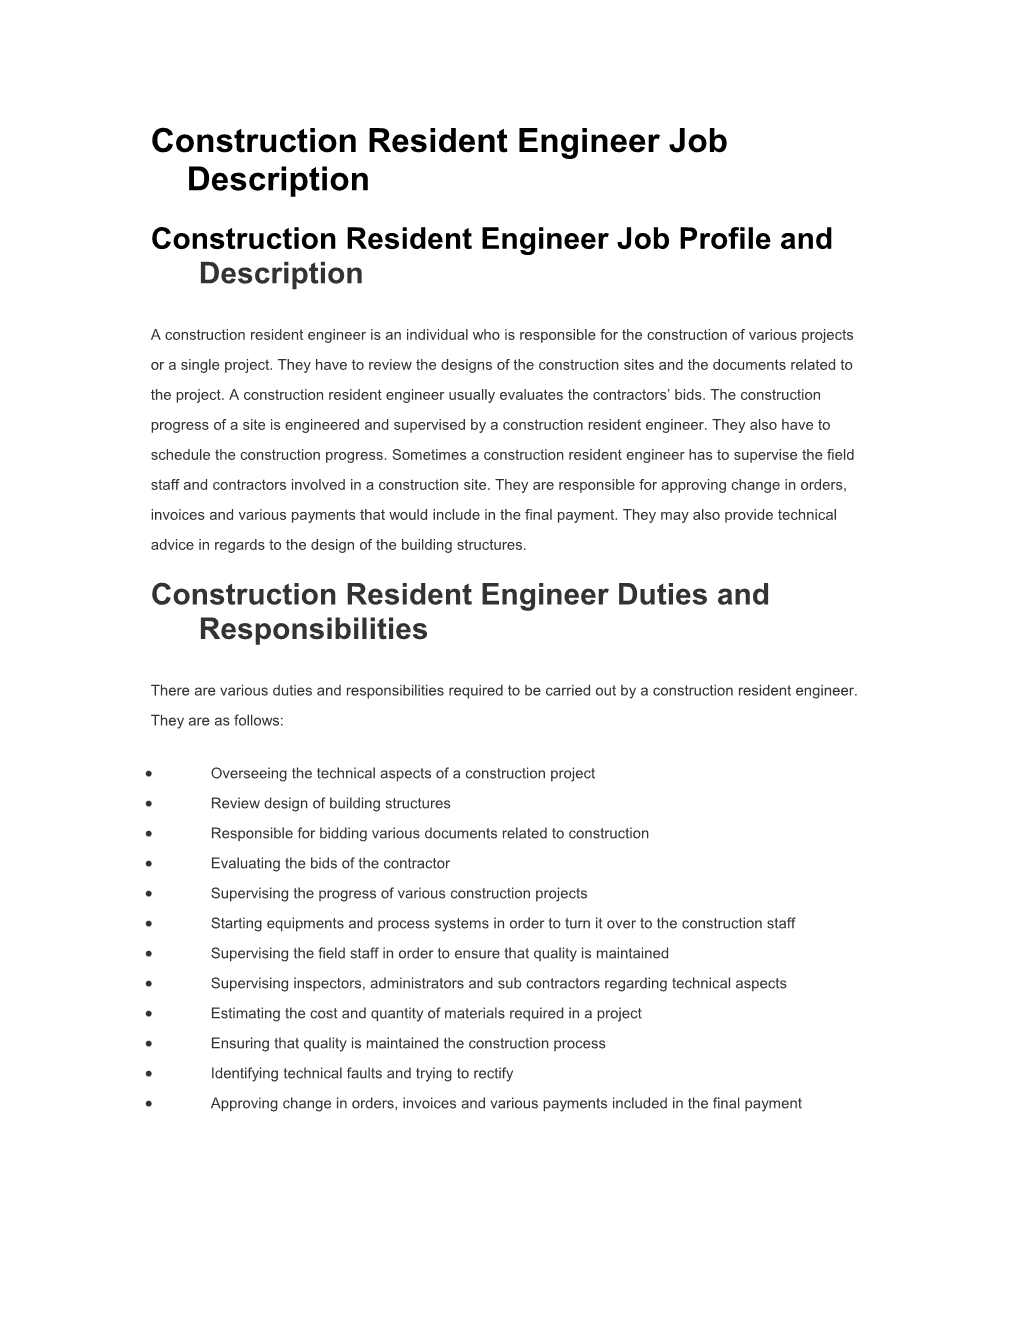 Construction Resident Engineer Job Description